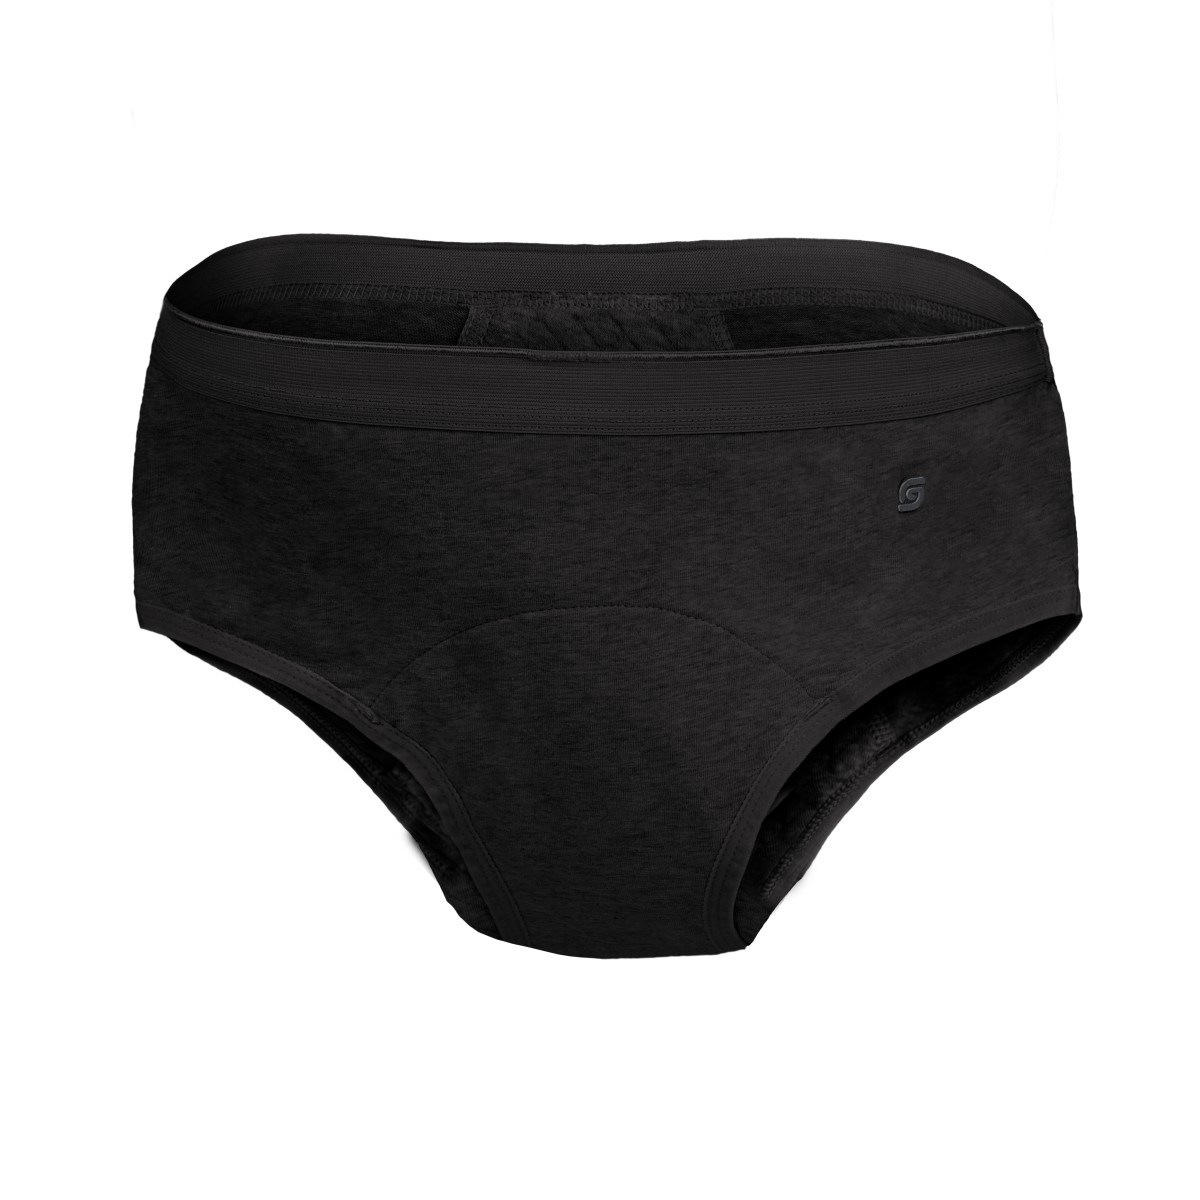 SOCHGREEN Period Underwear with 1 x Insert - Pink (Last Sizes - XS